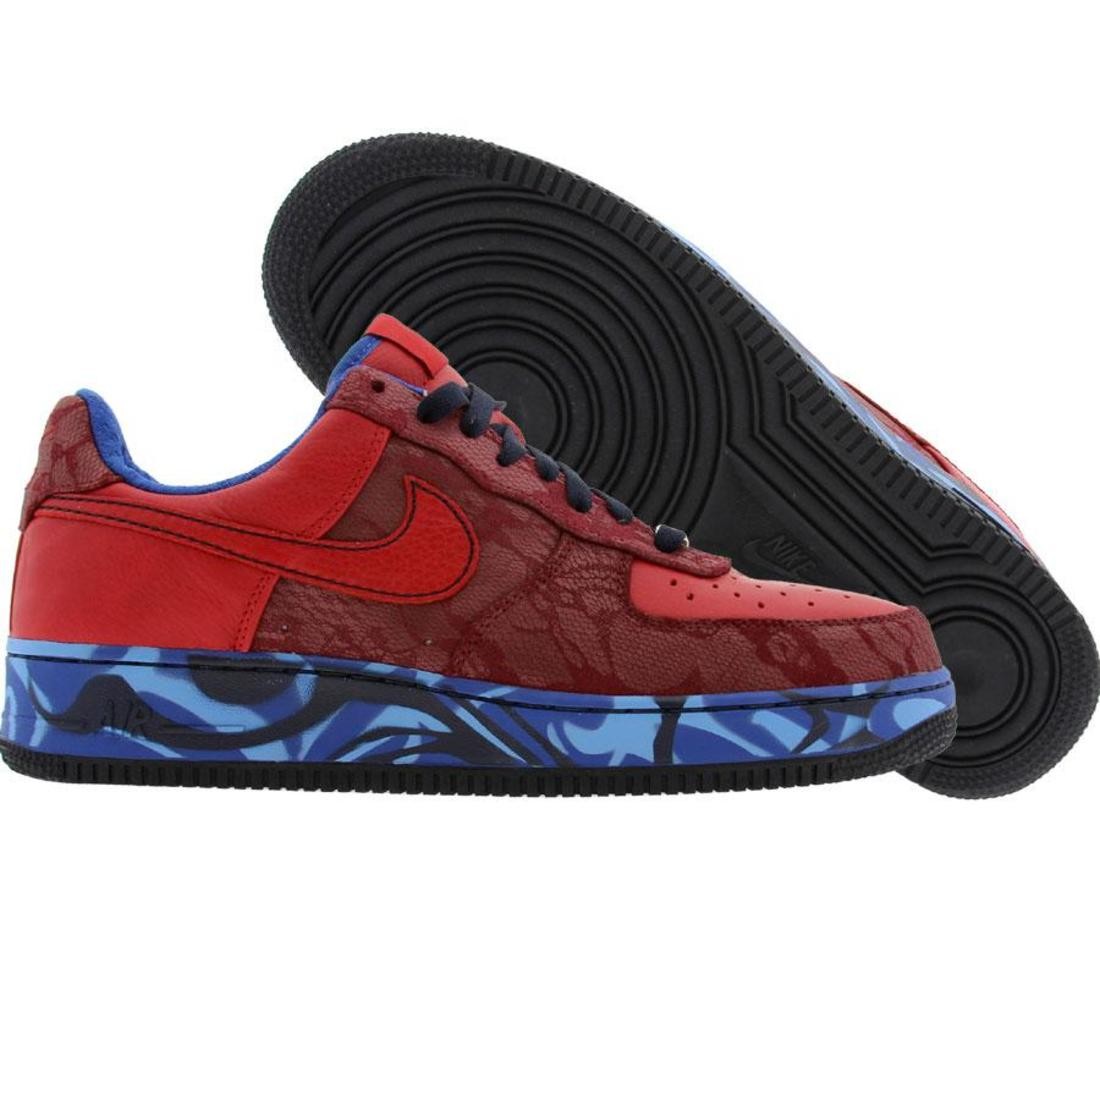 Nike Air Force 1 07 Low Premium  Paris Edition (varsity red / varsity red / royal blue)